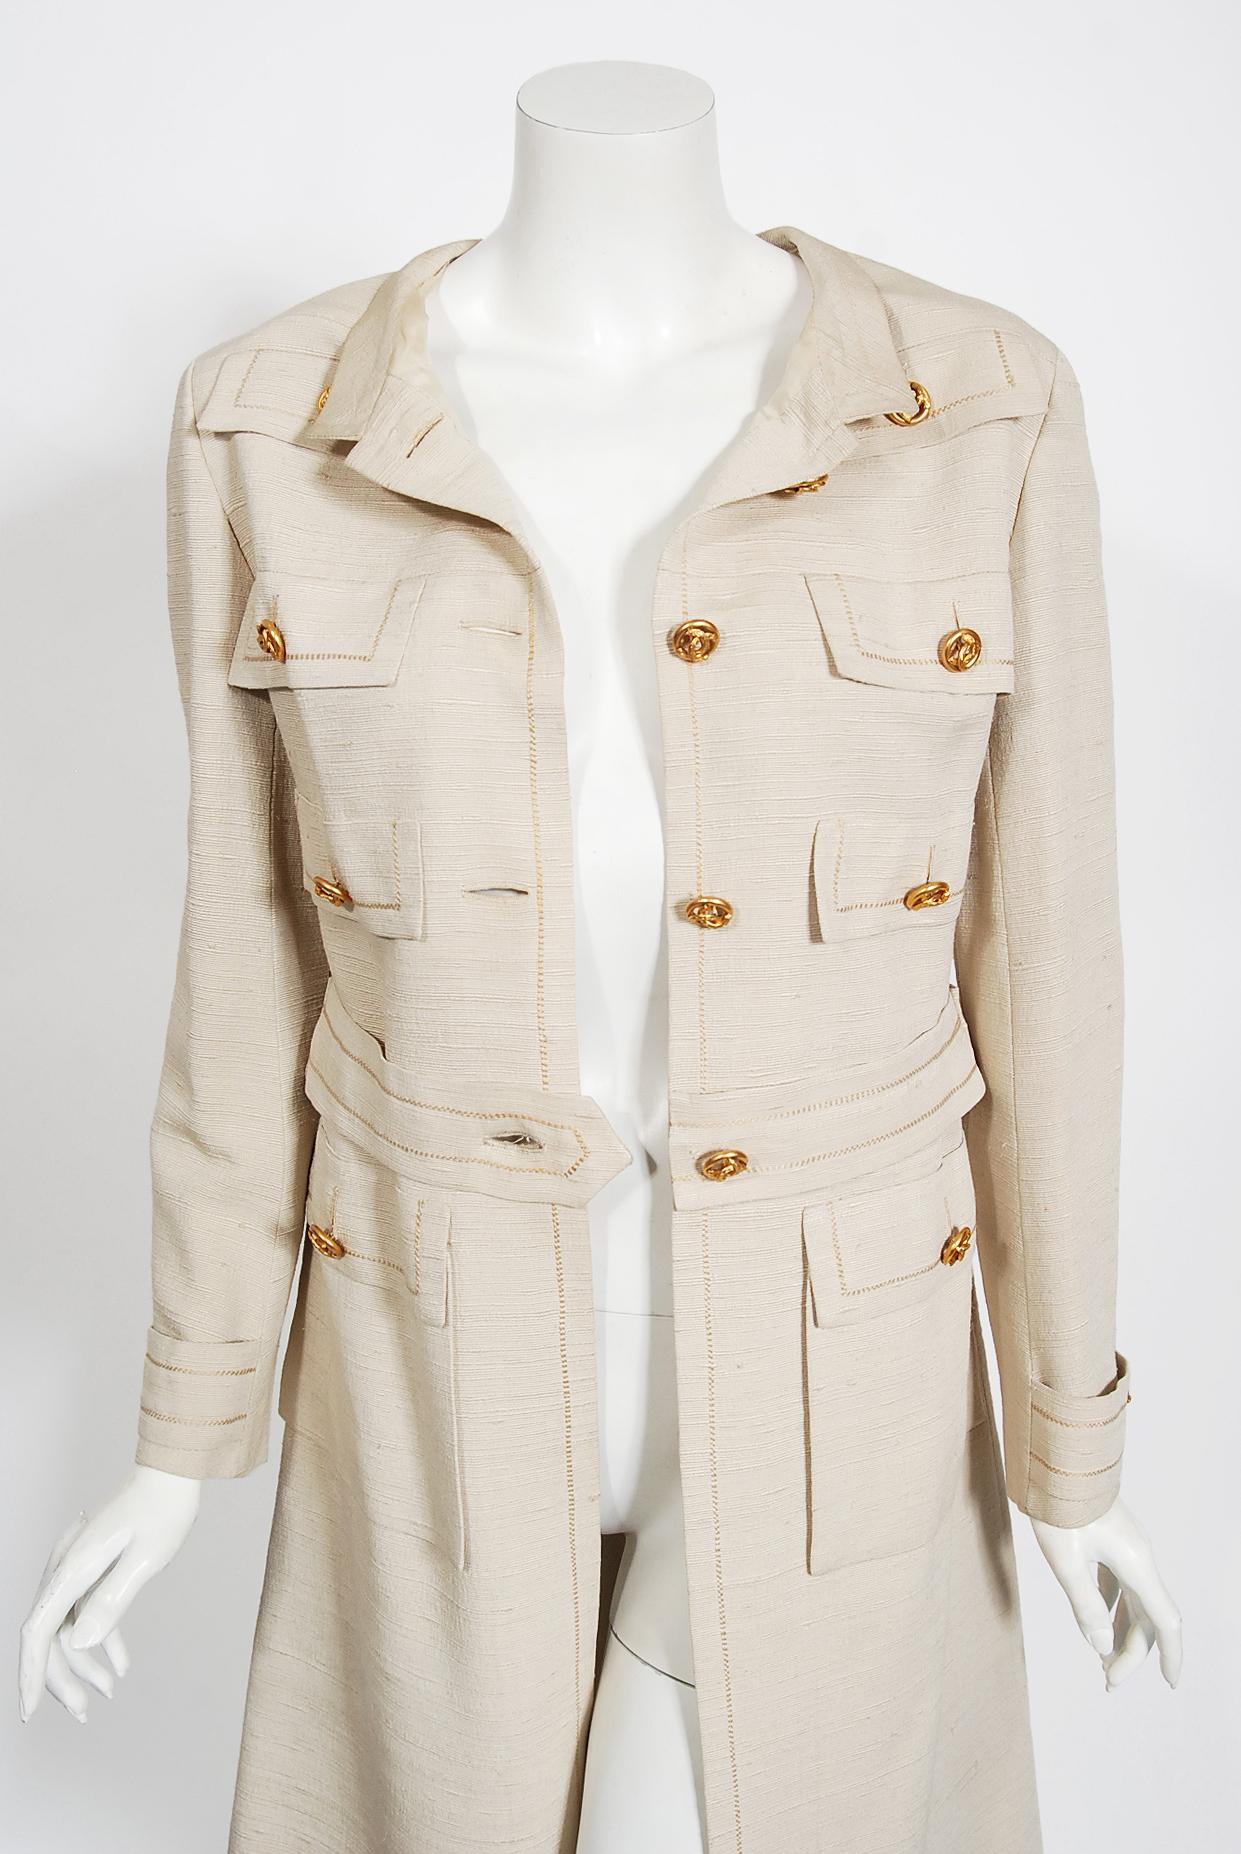 Vintage 1969 Chanel Haute Couture Documented Oatmeal Linen Jacket Skirt Suit  2